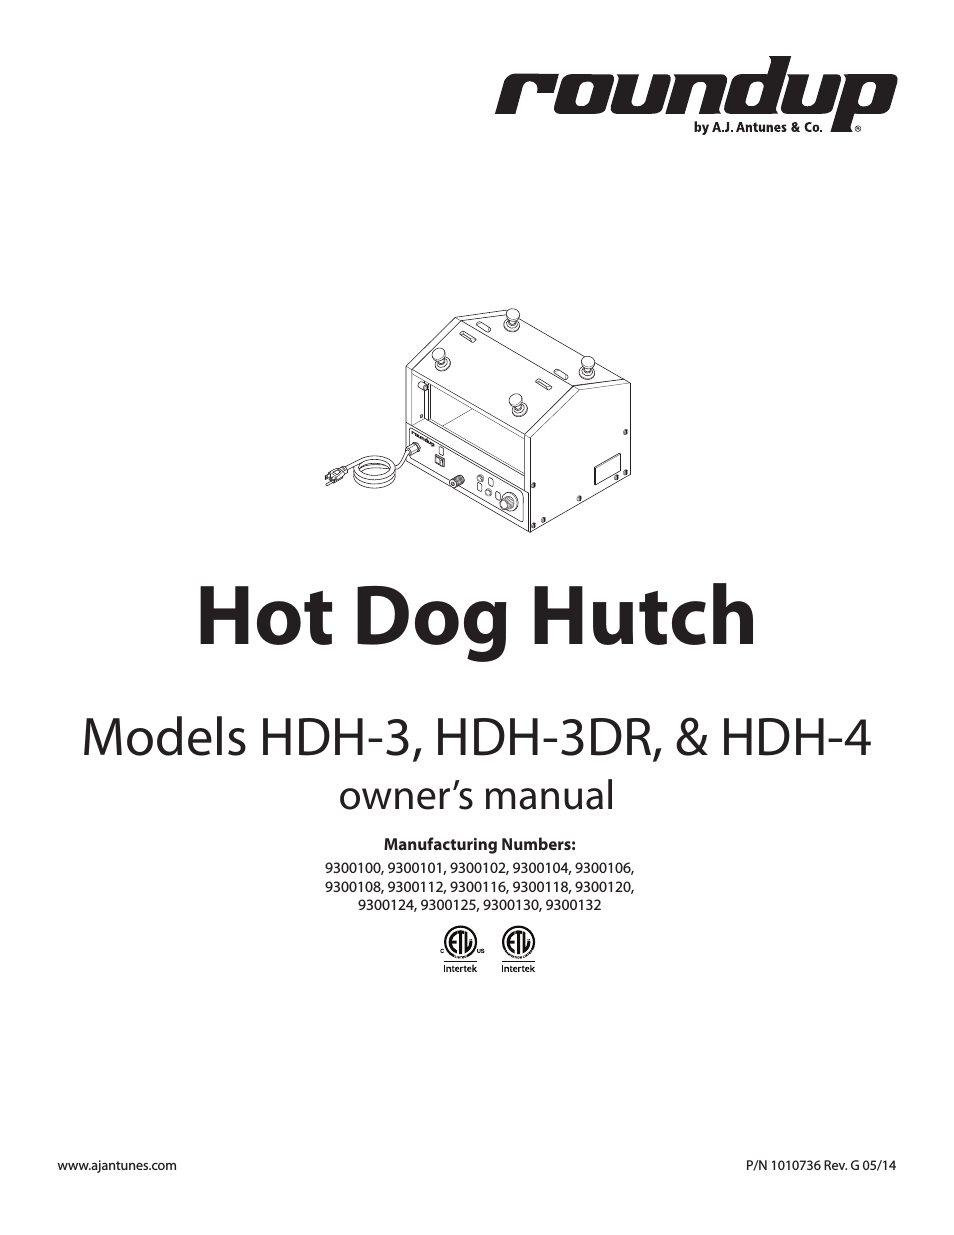 HDH-3DR 9300106